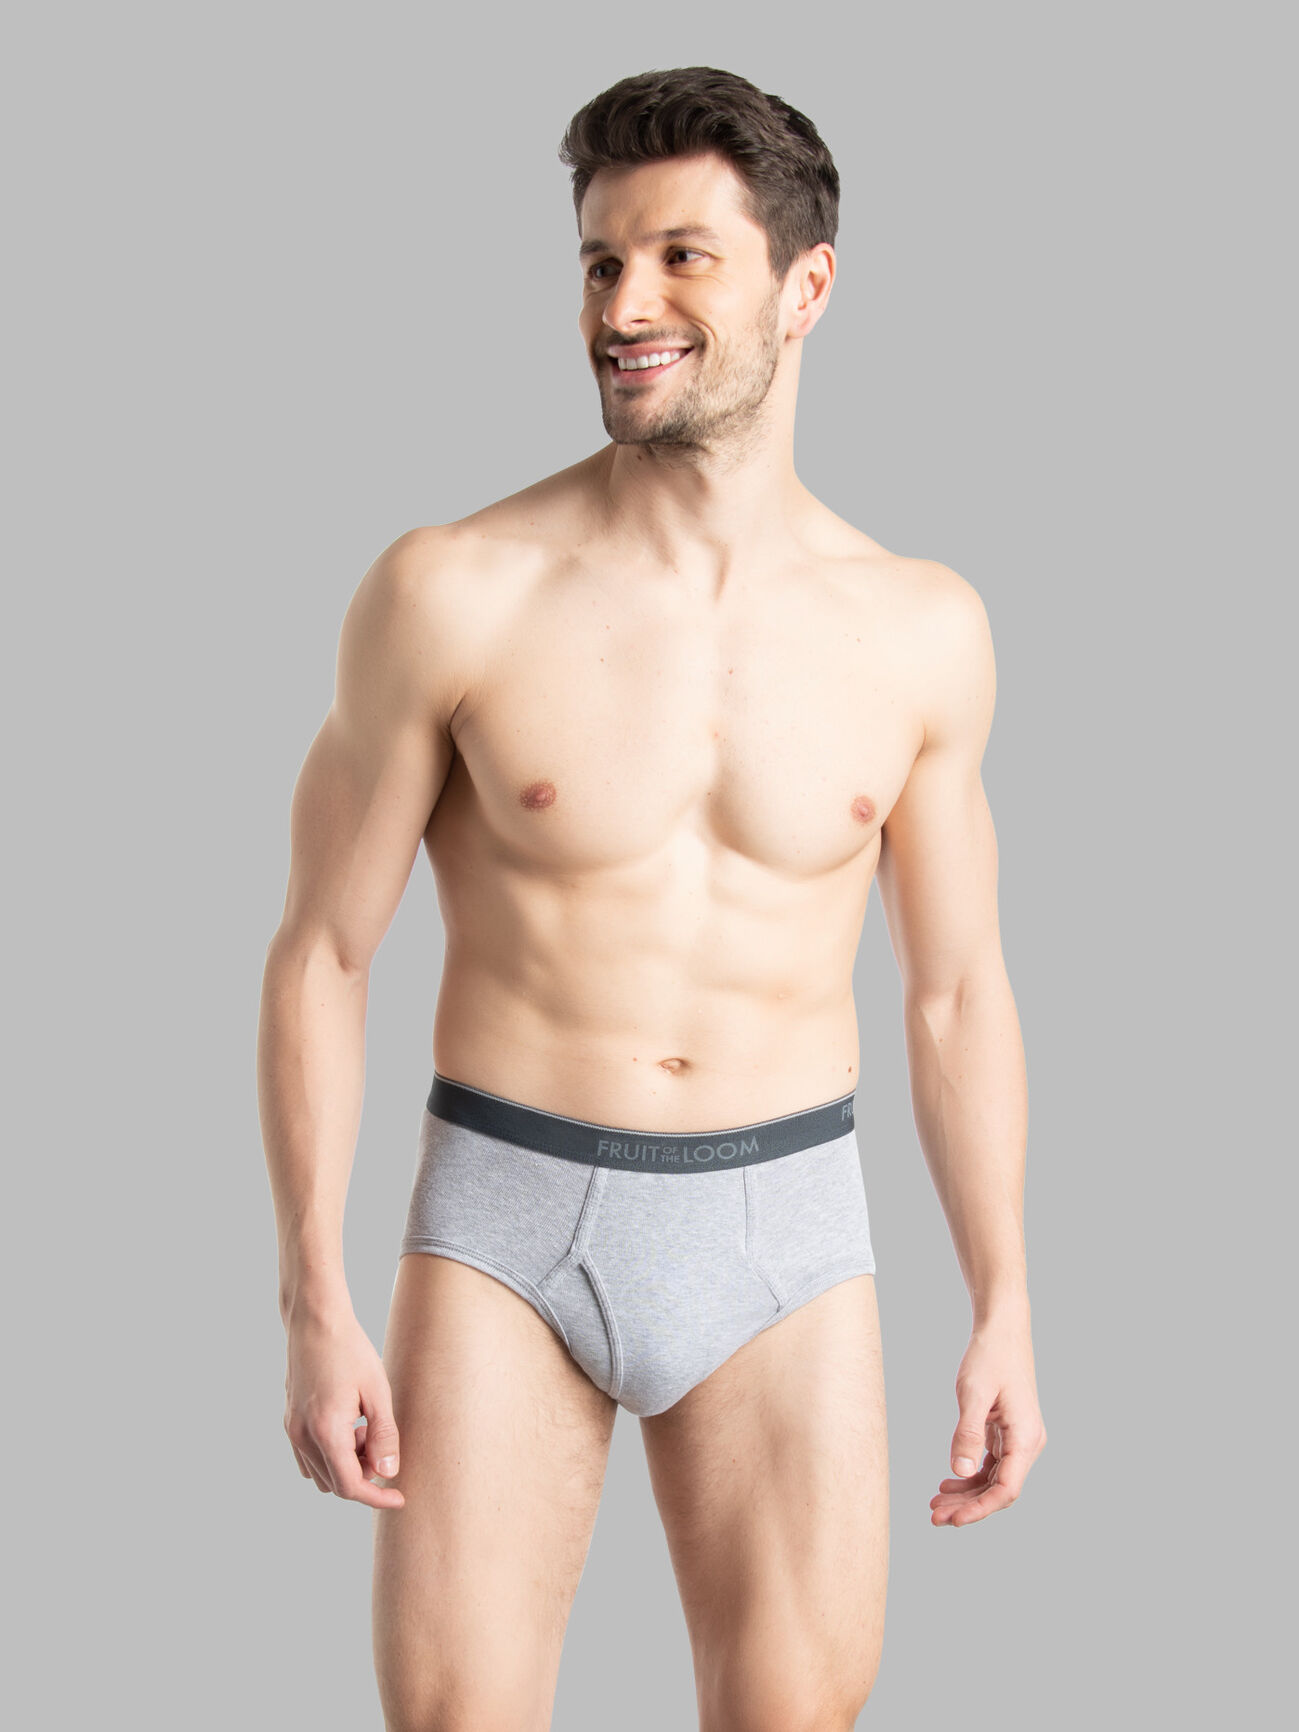 Fruit of the Loom Men's 3Pack Assorted Briefs Underwear, XL